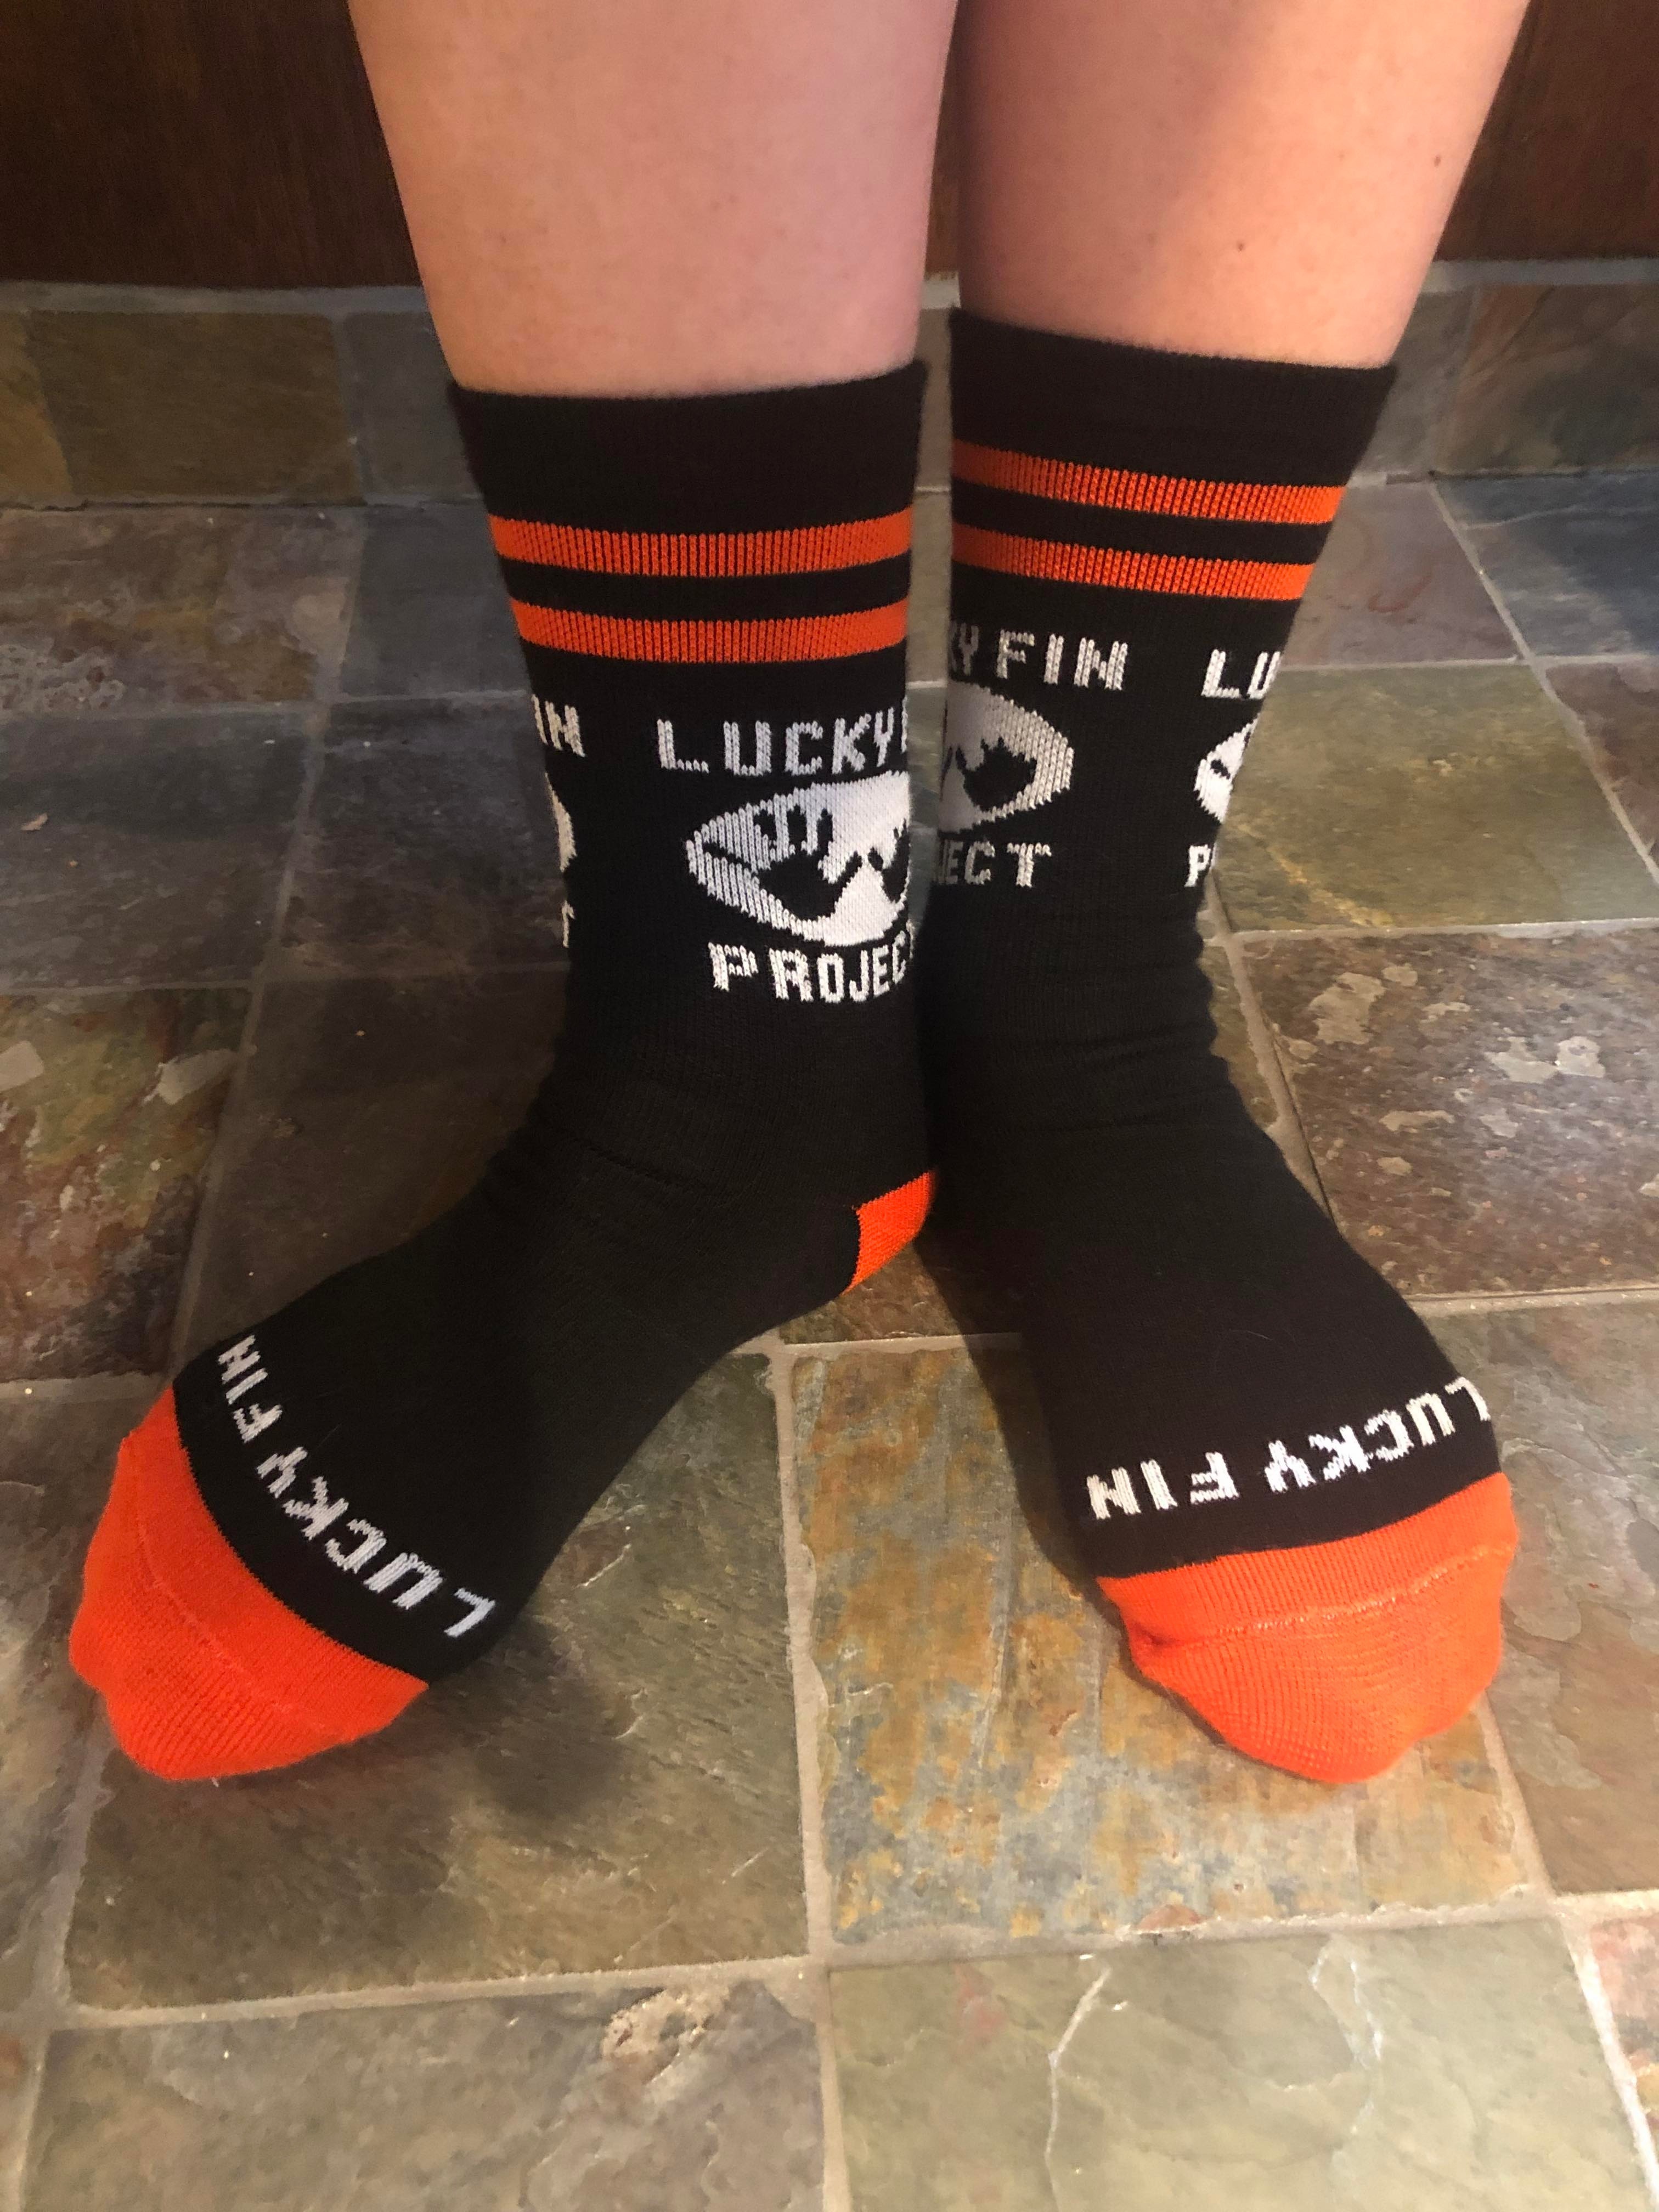 Lucky Fin Athletic Socks